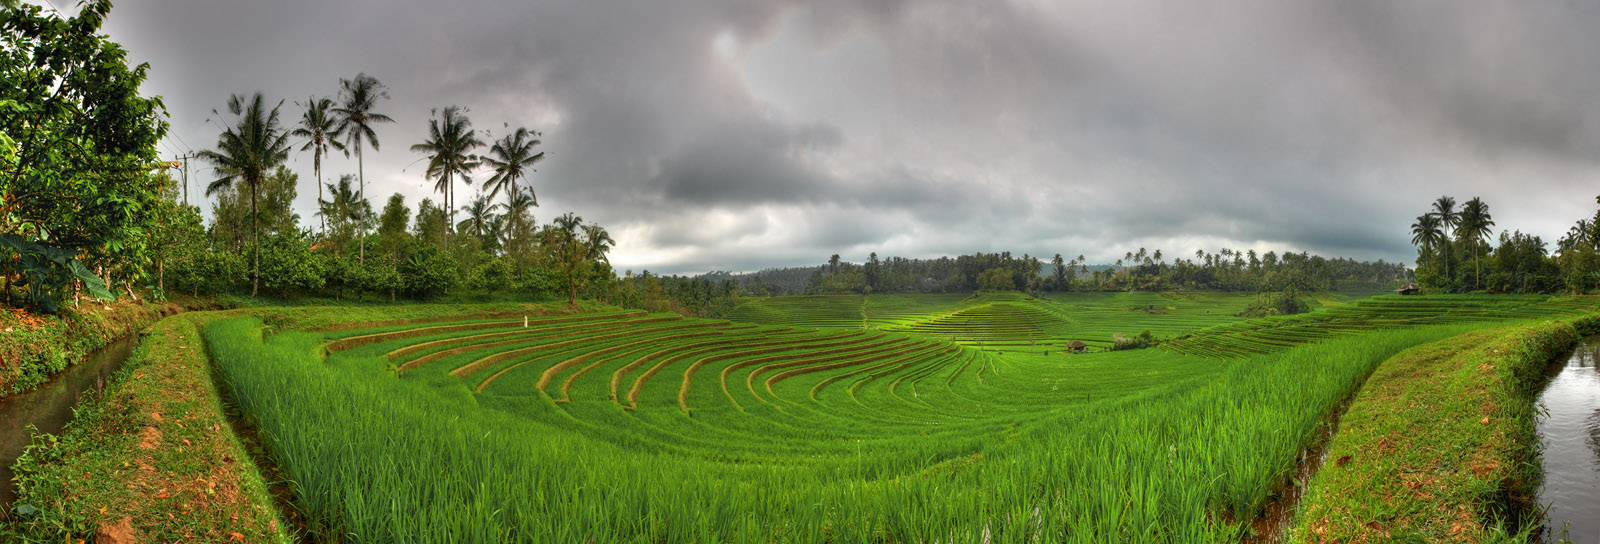 Rice Terraces, Belimbing, Bali, Sep 07